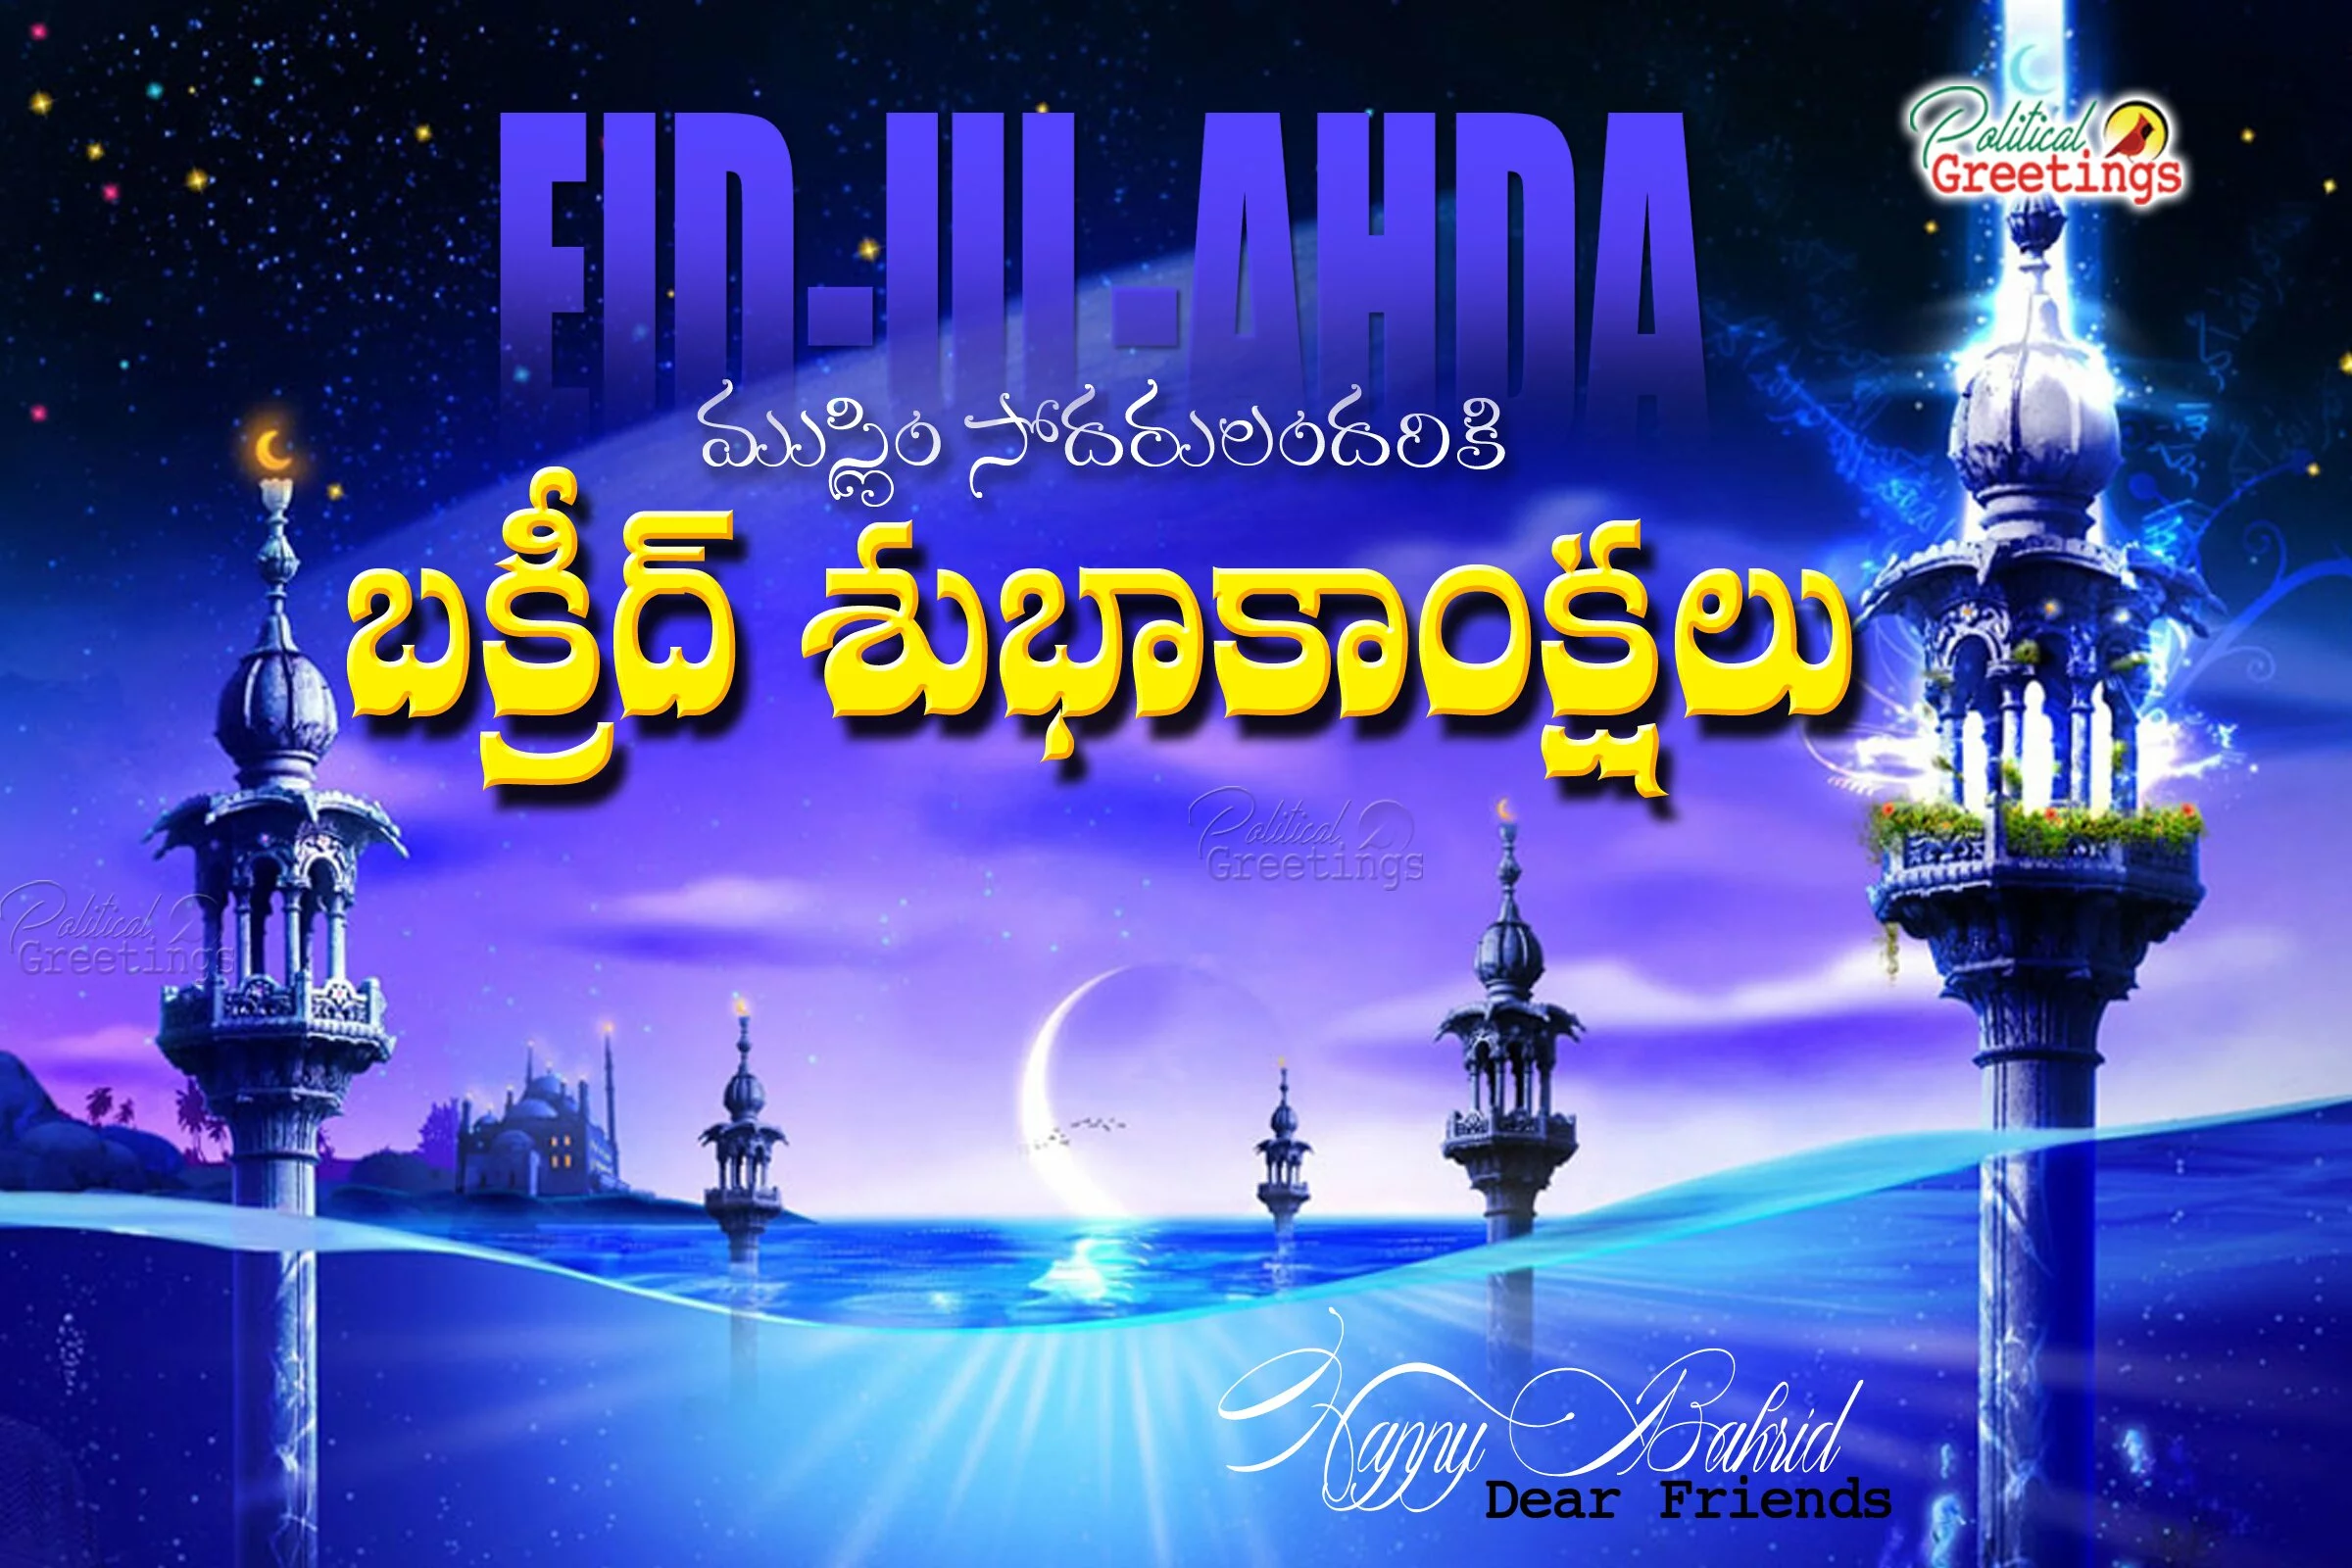 Telugu Bakrid Quotes hd wallpapers Free download-Islamic Hd Wallpapers Free download